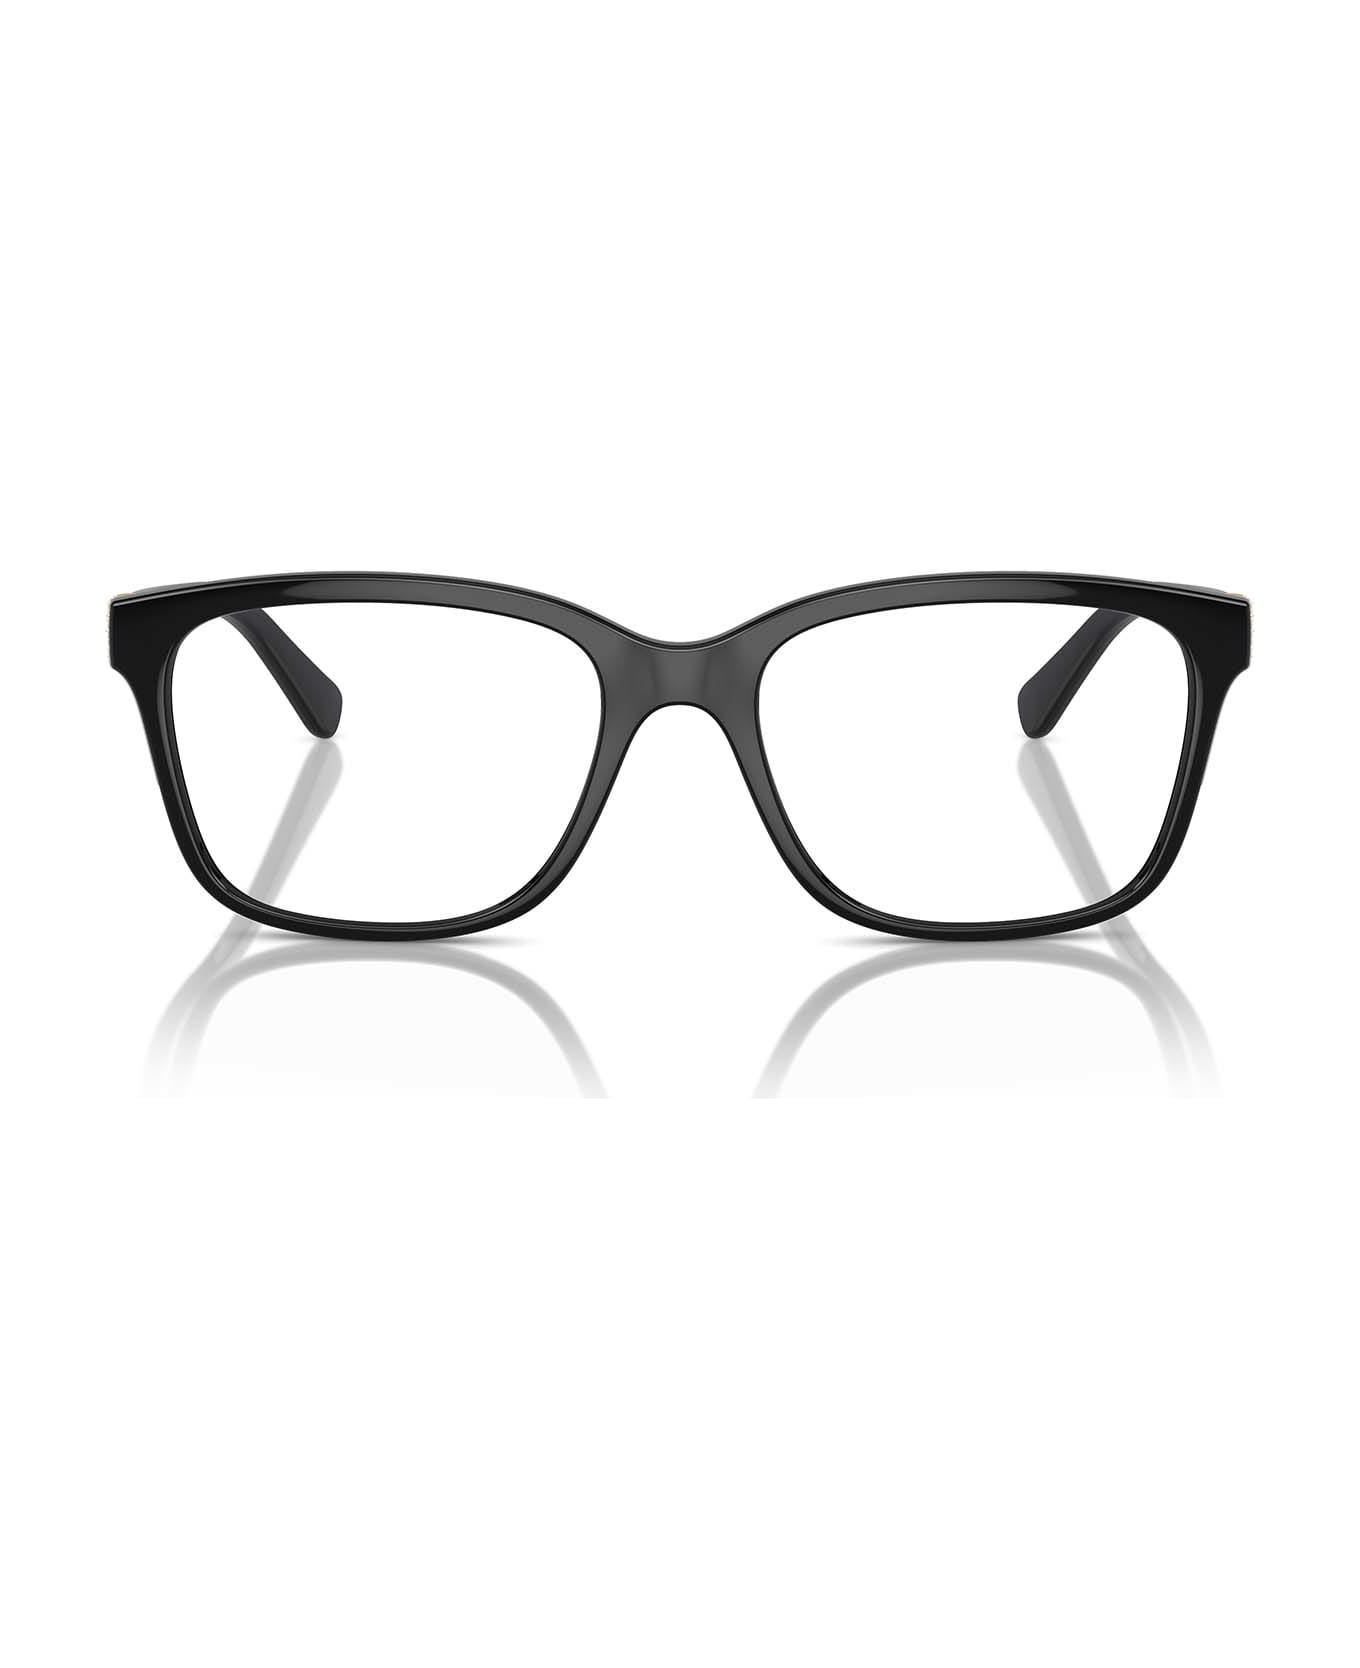 Vogue Eyewear Vo5574b Black Glasses - Black